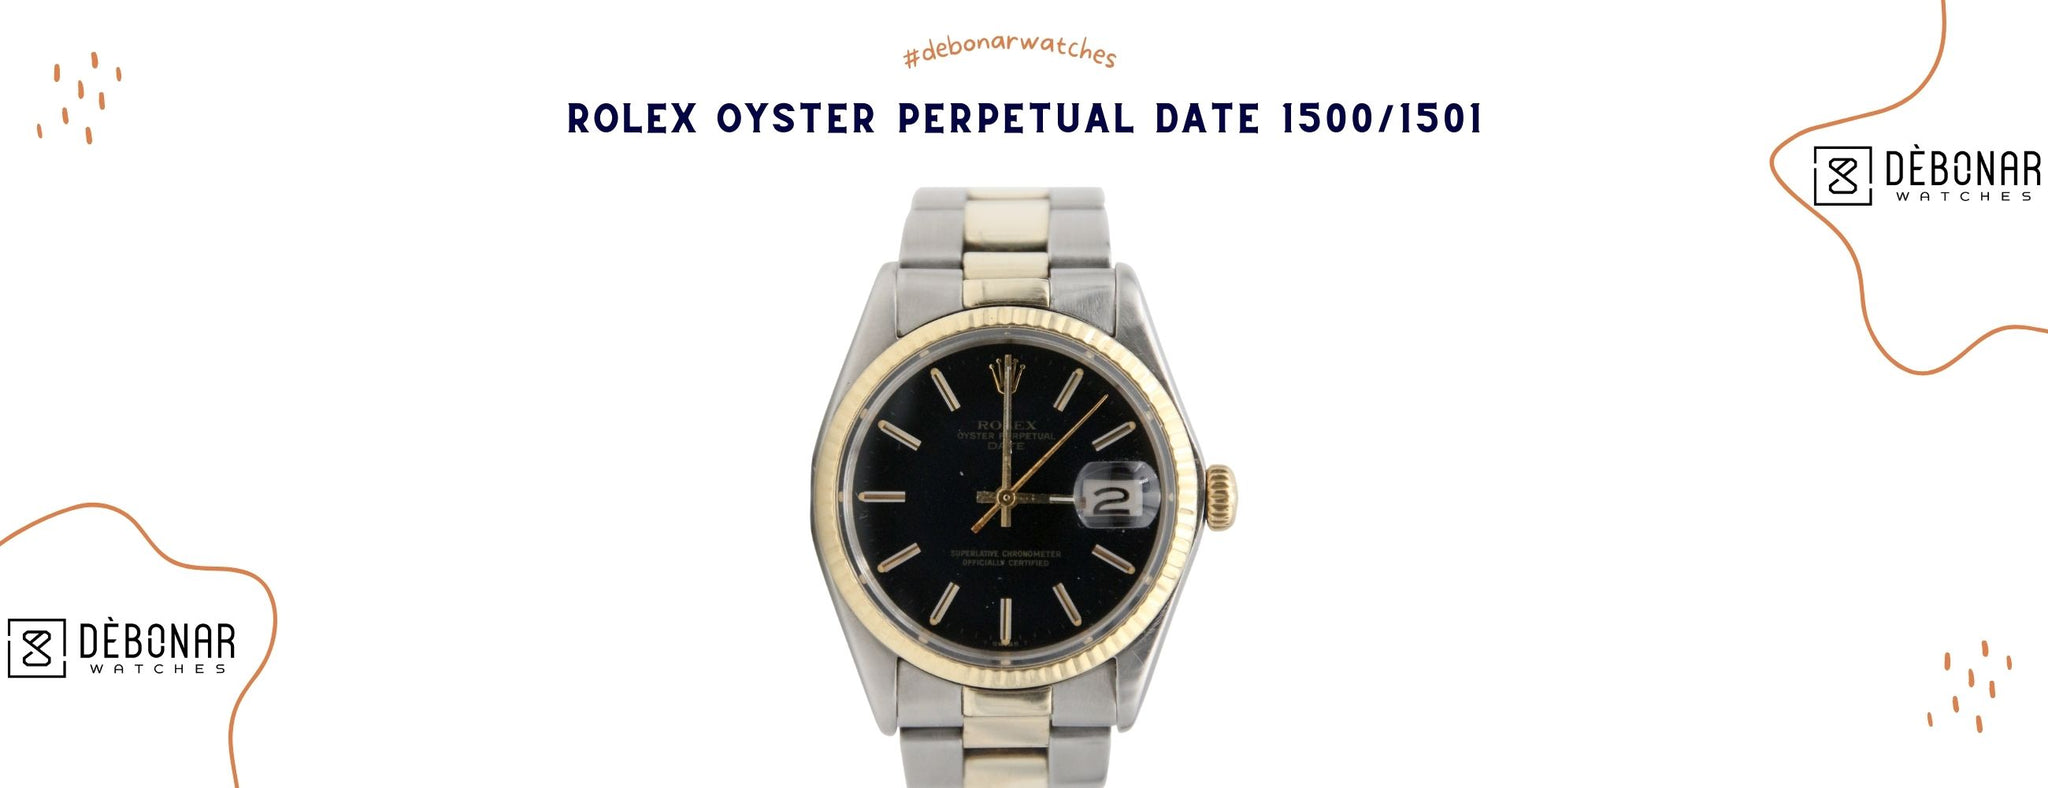 Rolex oyster perpetual date 1500